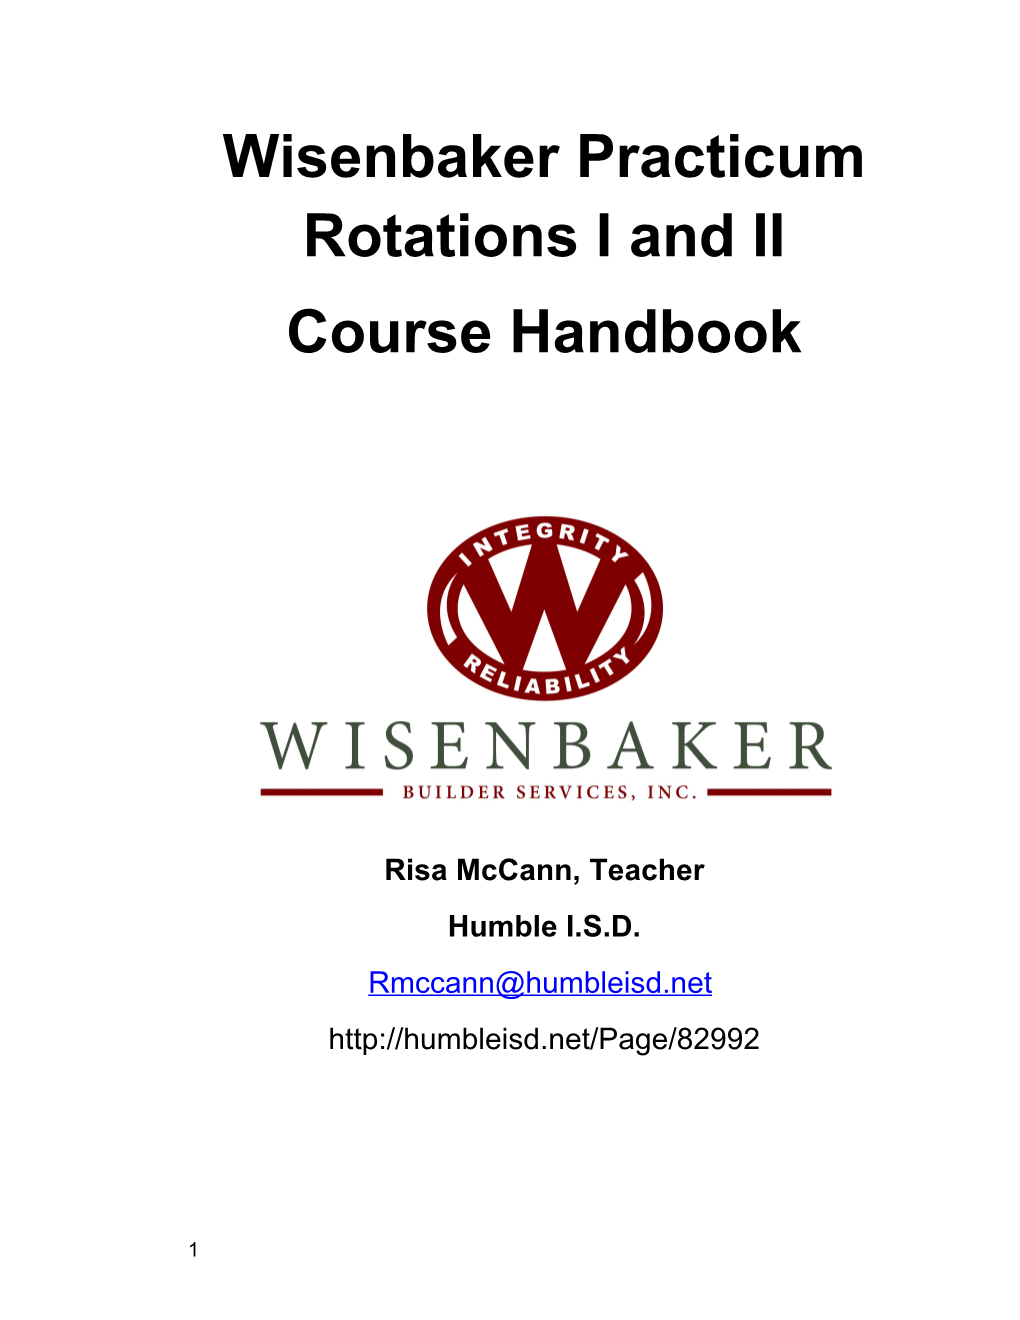 Wisenbaker Practicum Rotations I and II